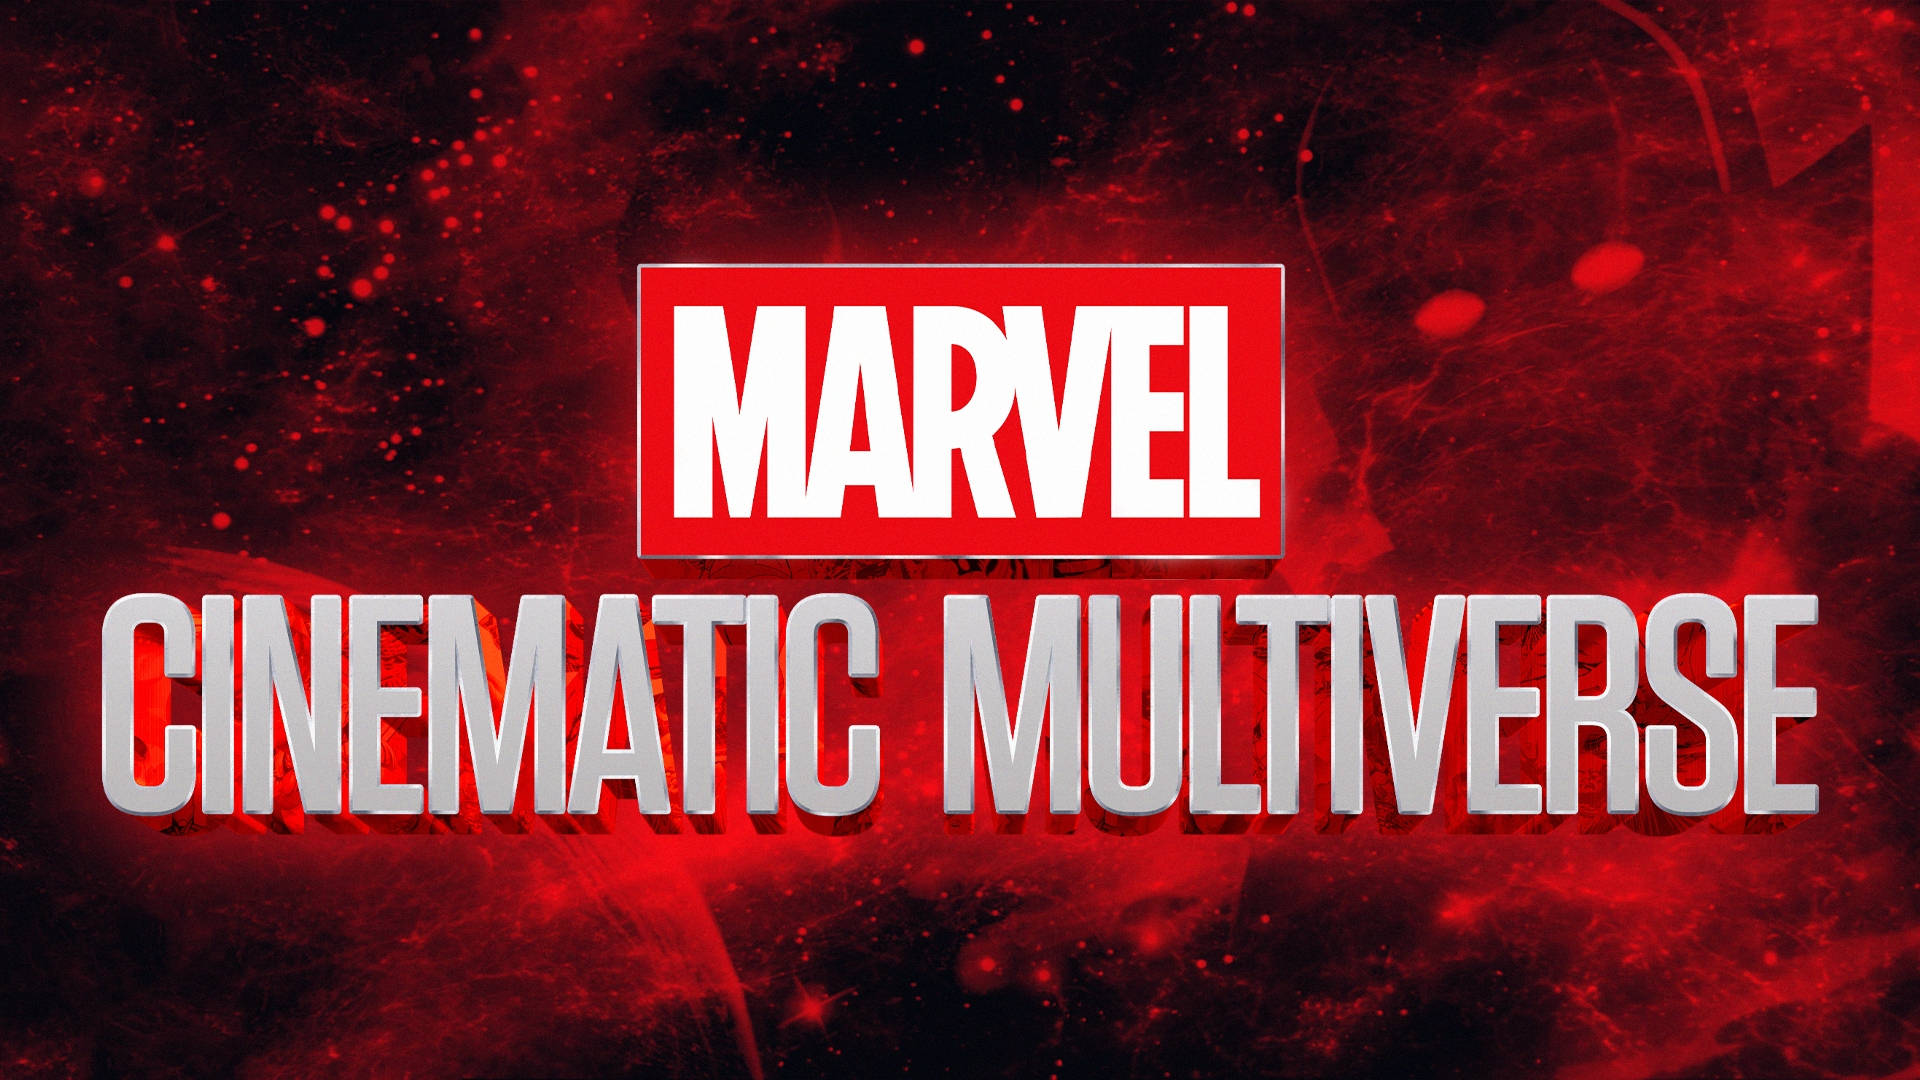 Marvel Cinematic Multiverse Wallpaper